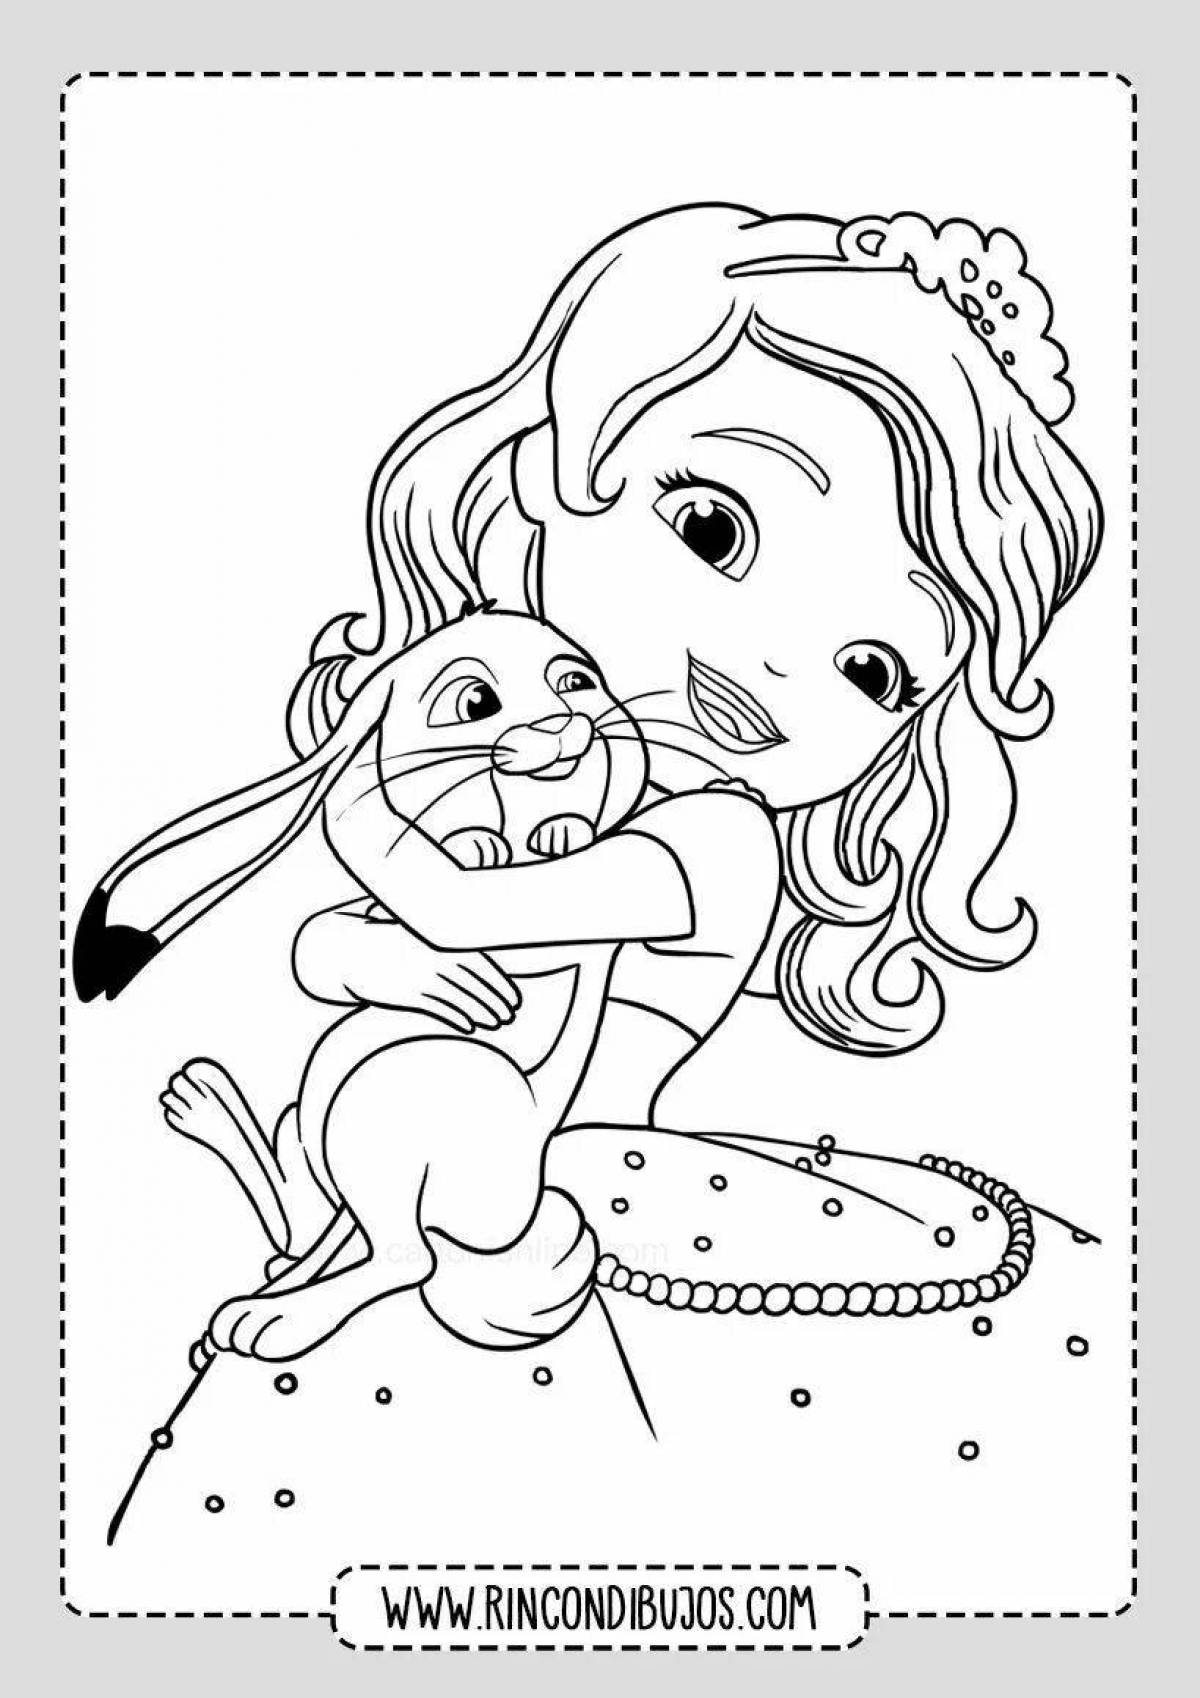 Fun coloring princess with a dog